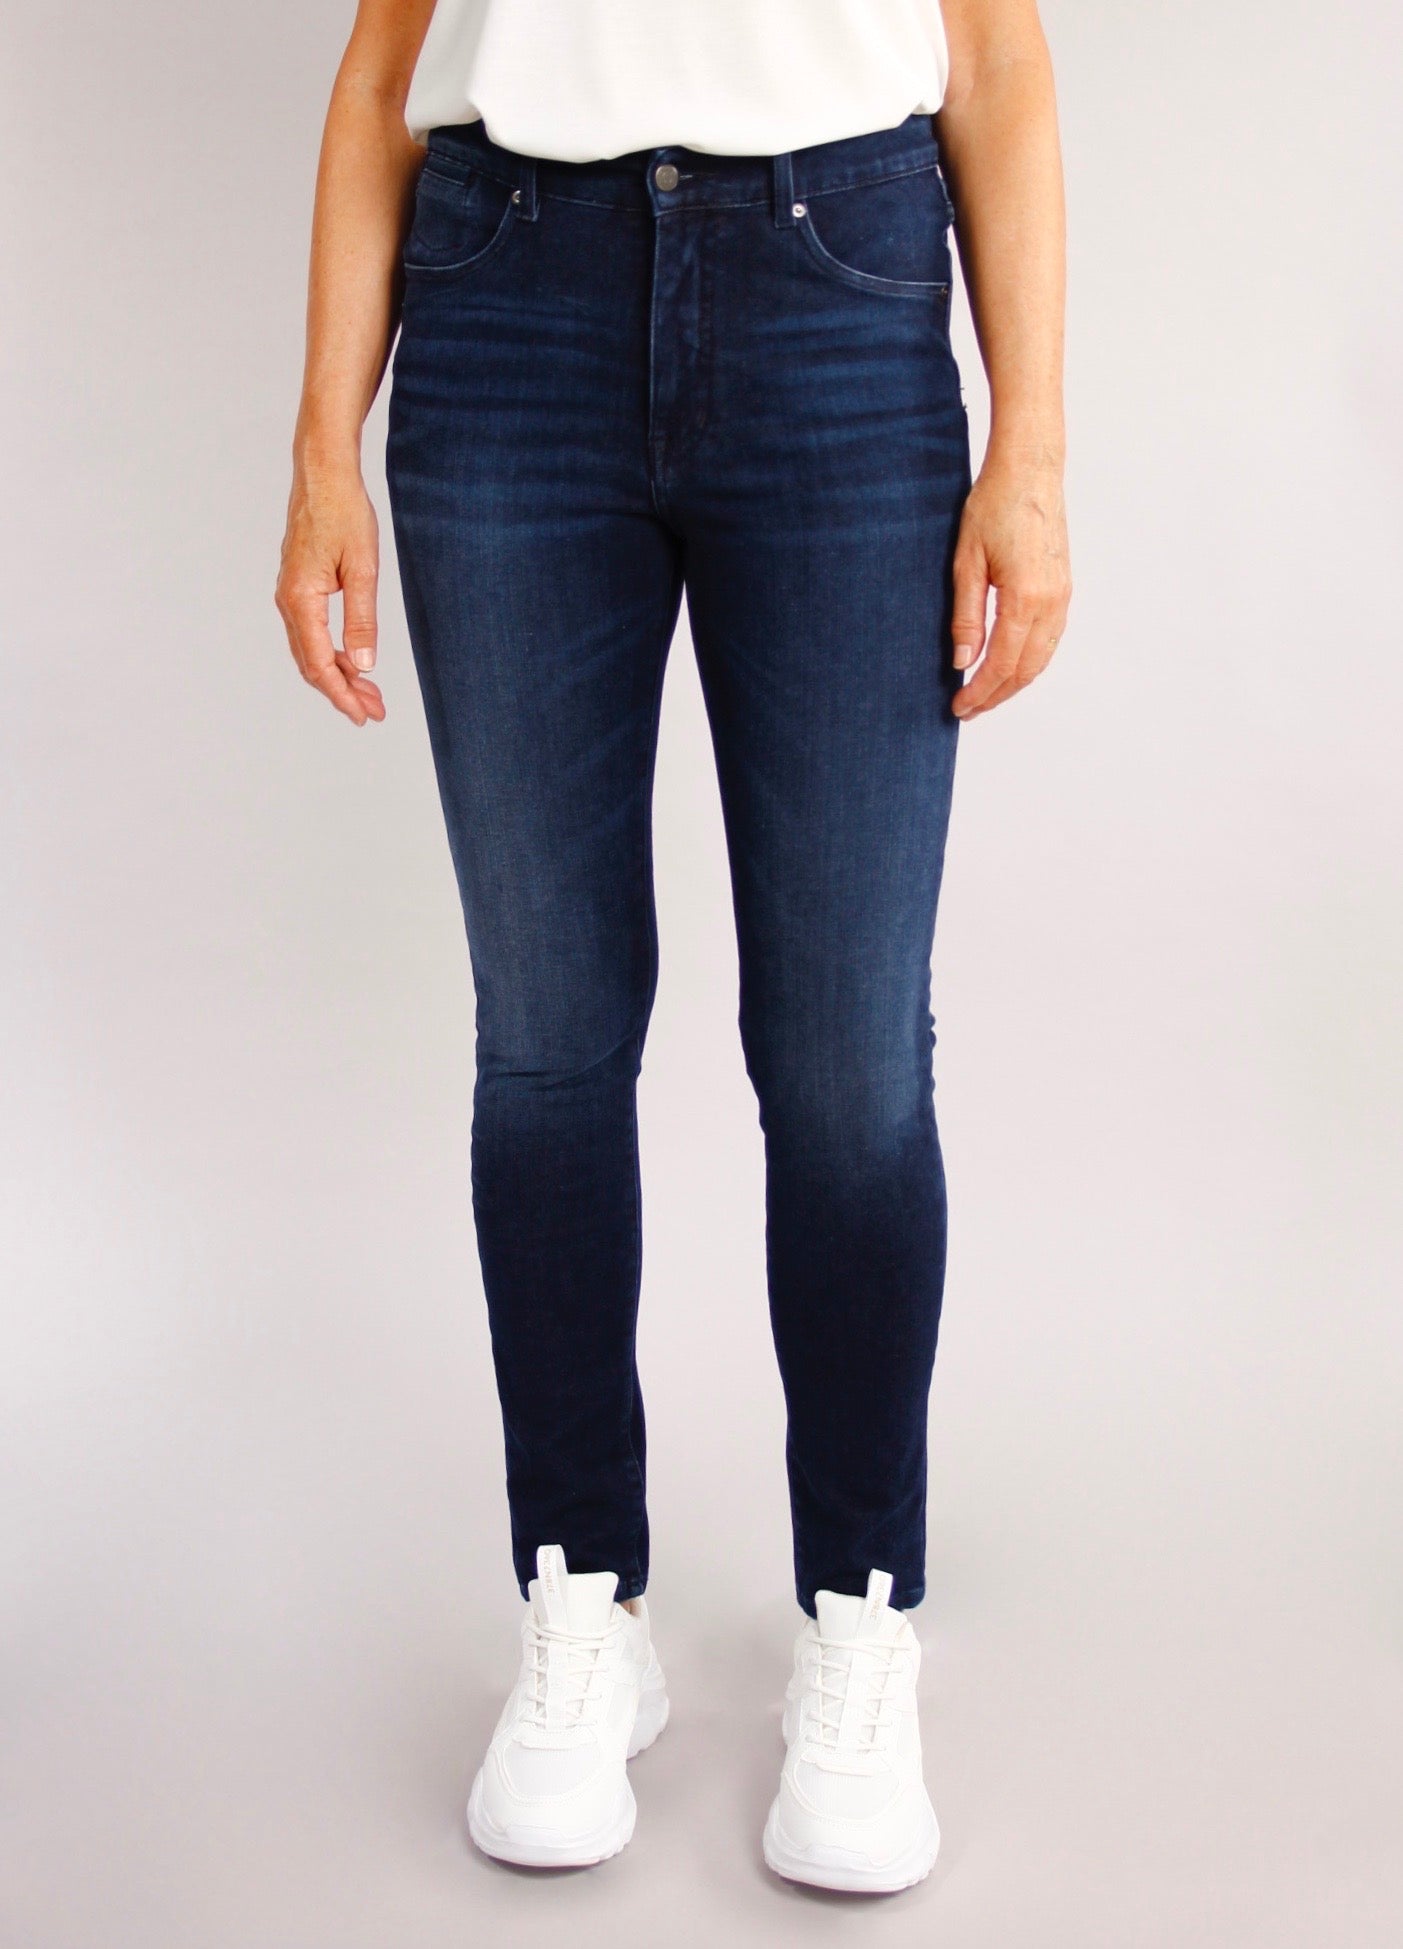 Azalea Night Sky Jeans - Dame - Slim leg - High waist - Stretchy